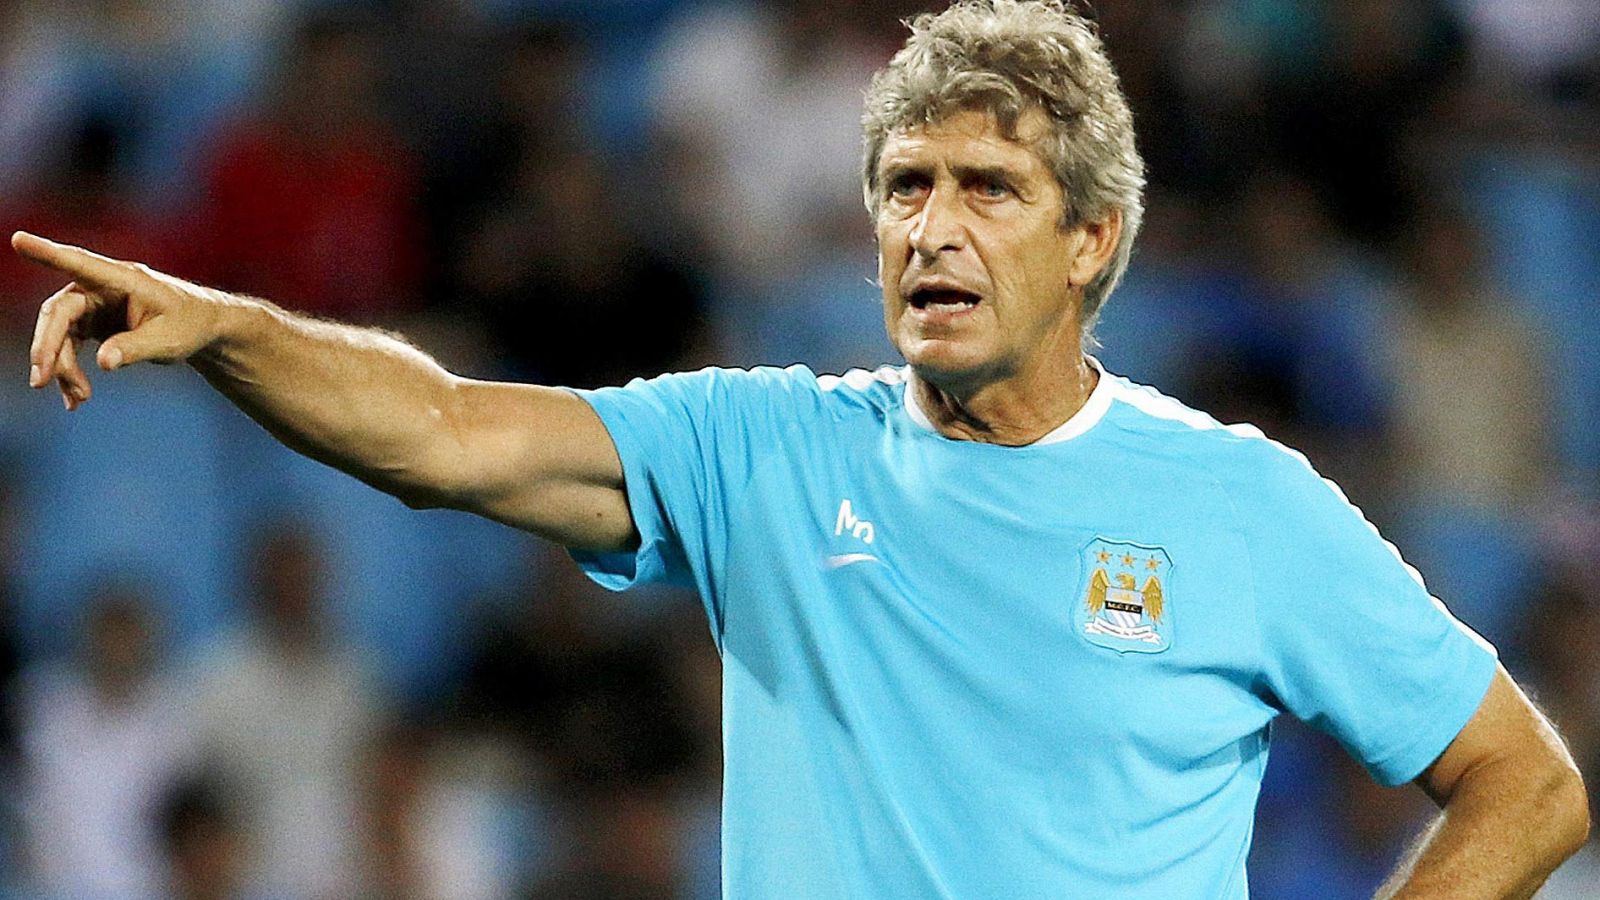 El entrenador del Manchester City, el chileno Manuel Pellegrini